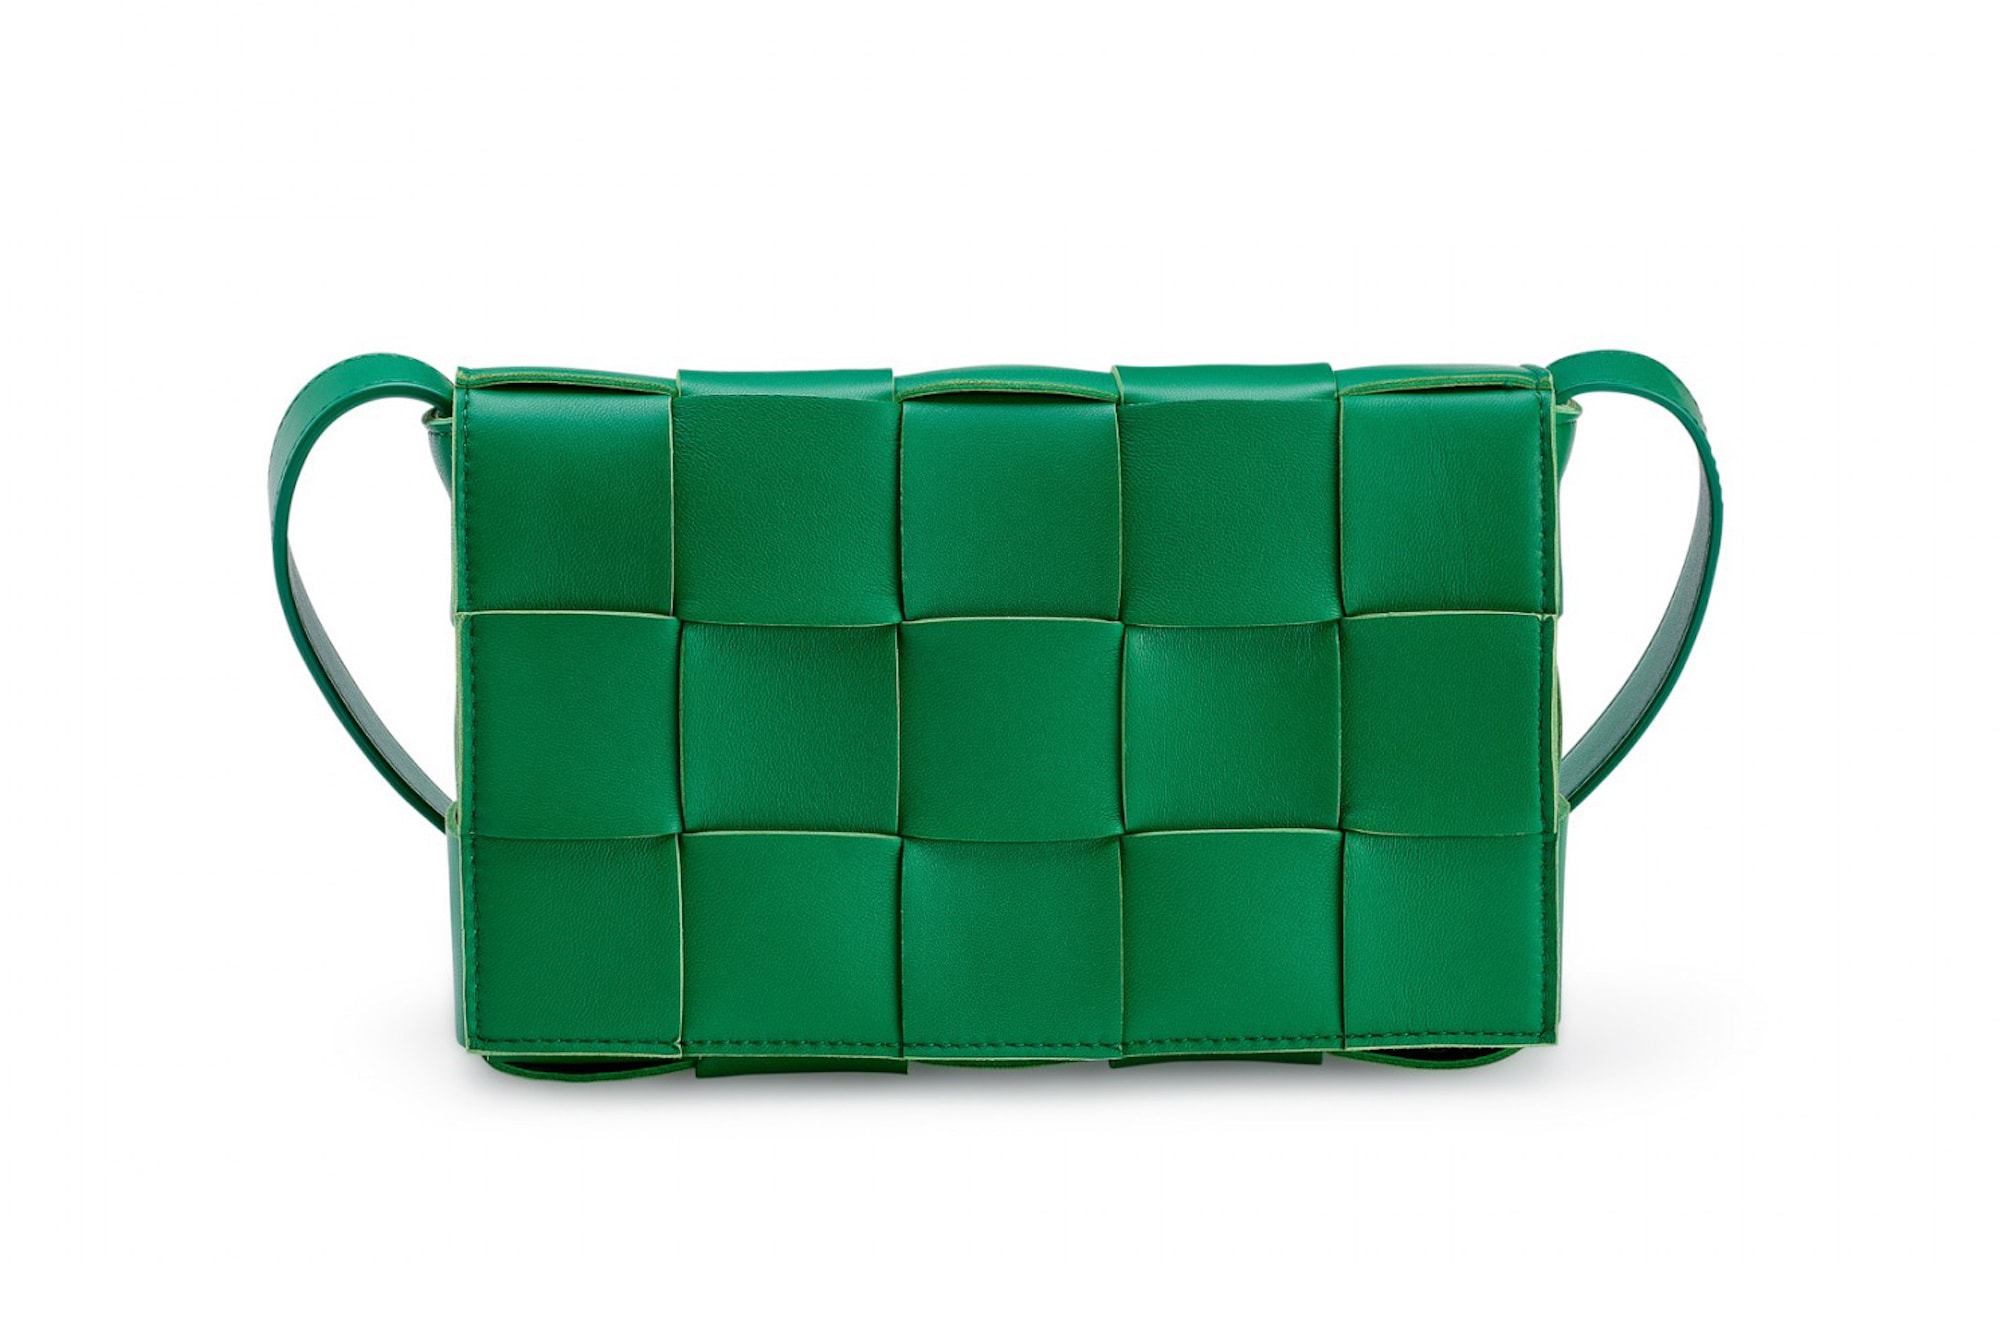 Bottega Veneta Spring/Summer 2020 Bags Collection Pouch Lace Bag Green Purple Blue Orange